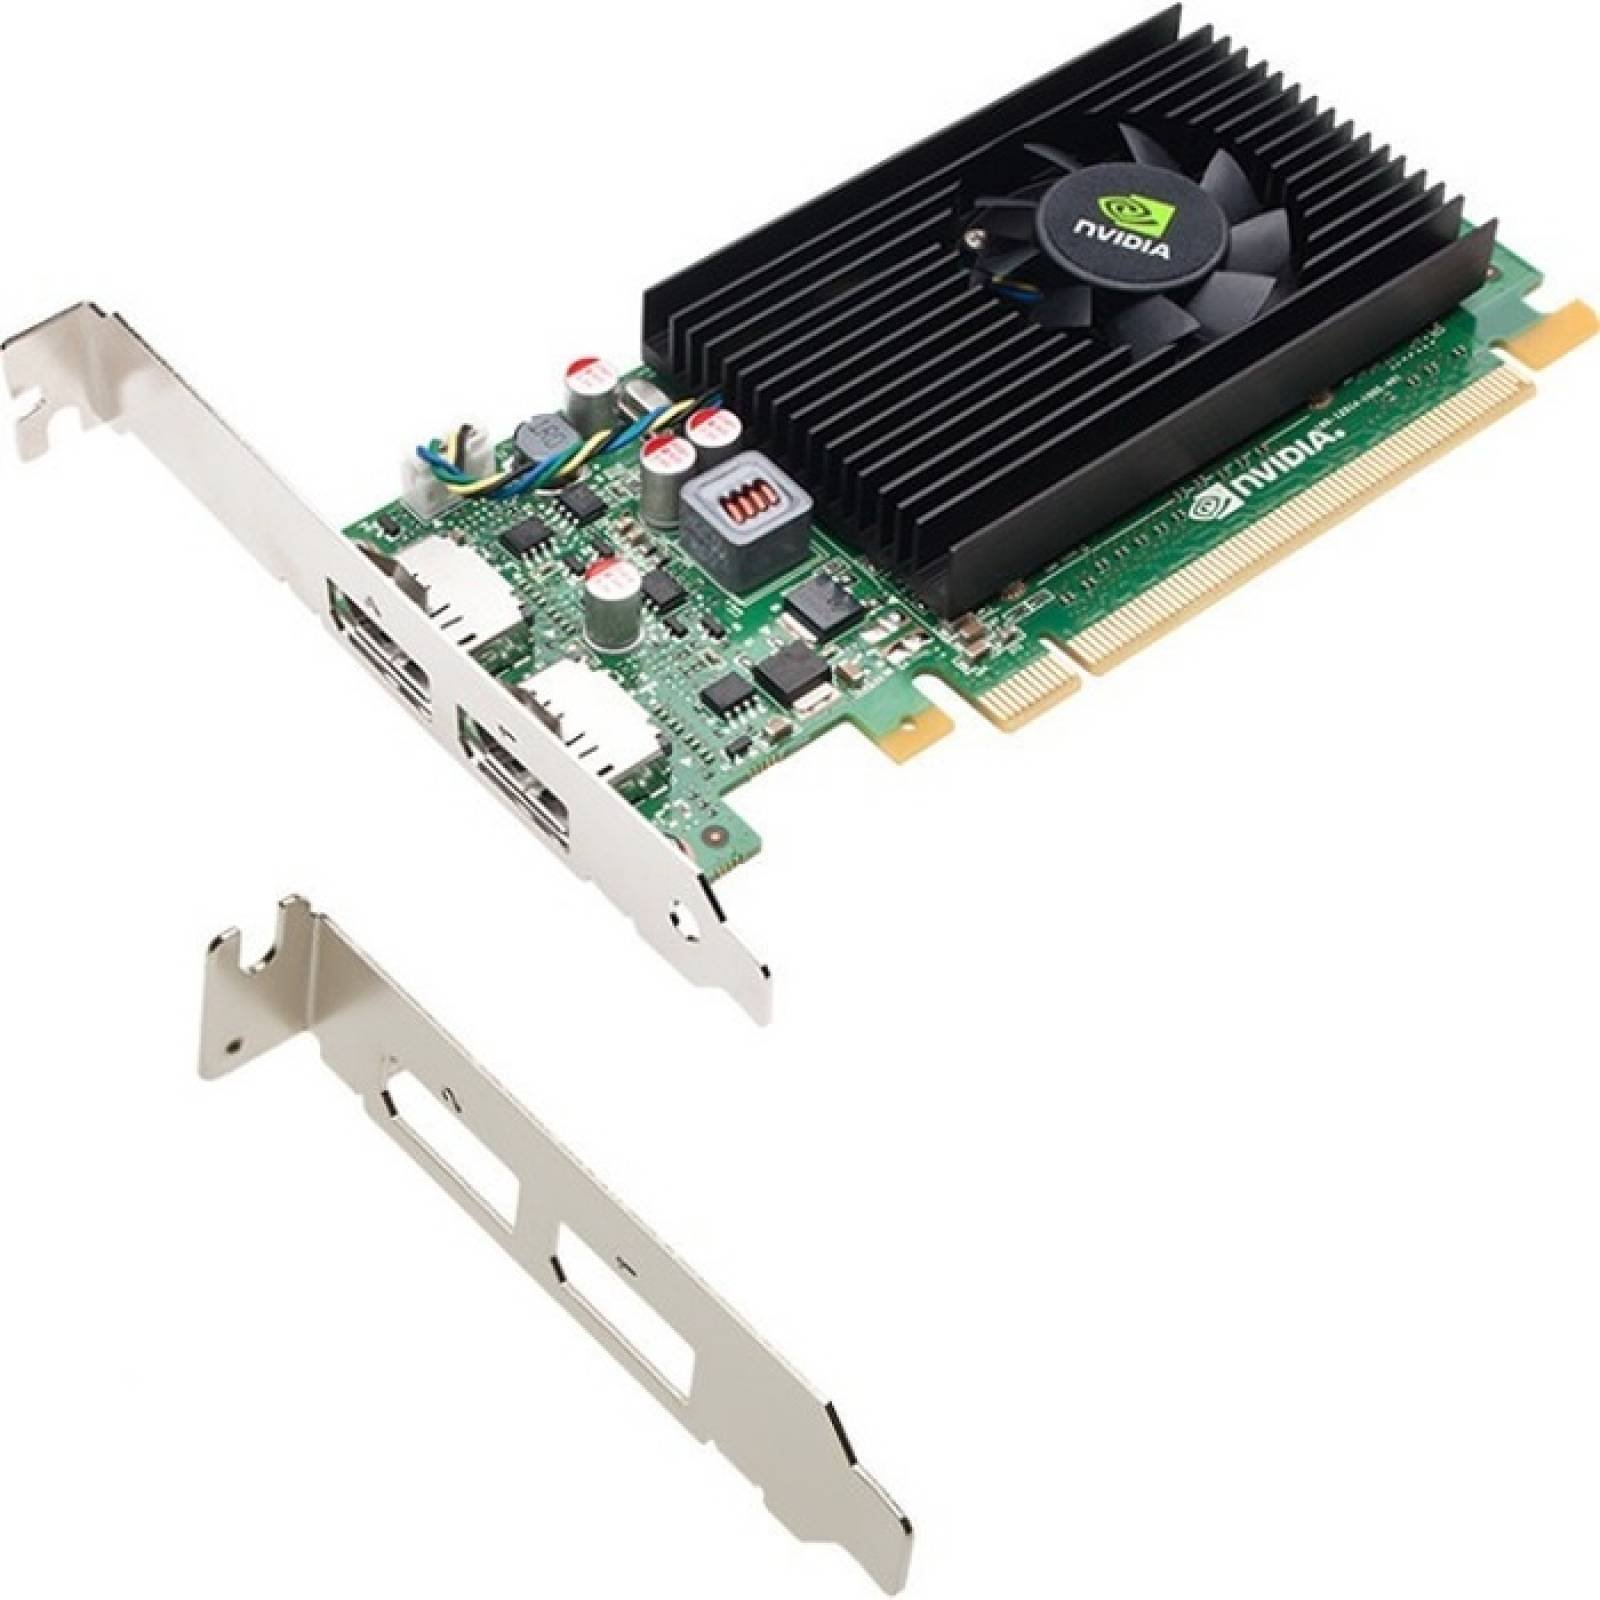 Tarjeta grfica PNY Quadro NVS 310  1 GB DDR3 SDRAM  Perfil bajo  Se requiere espacio de ranura nica